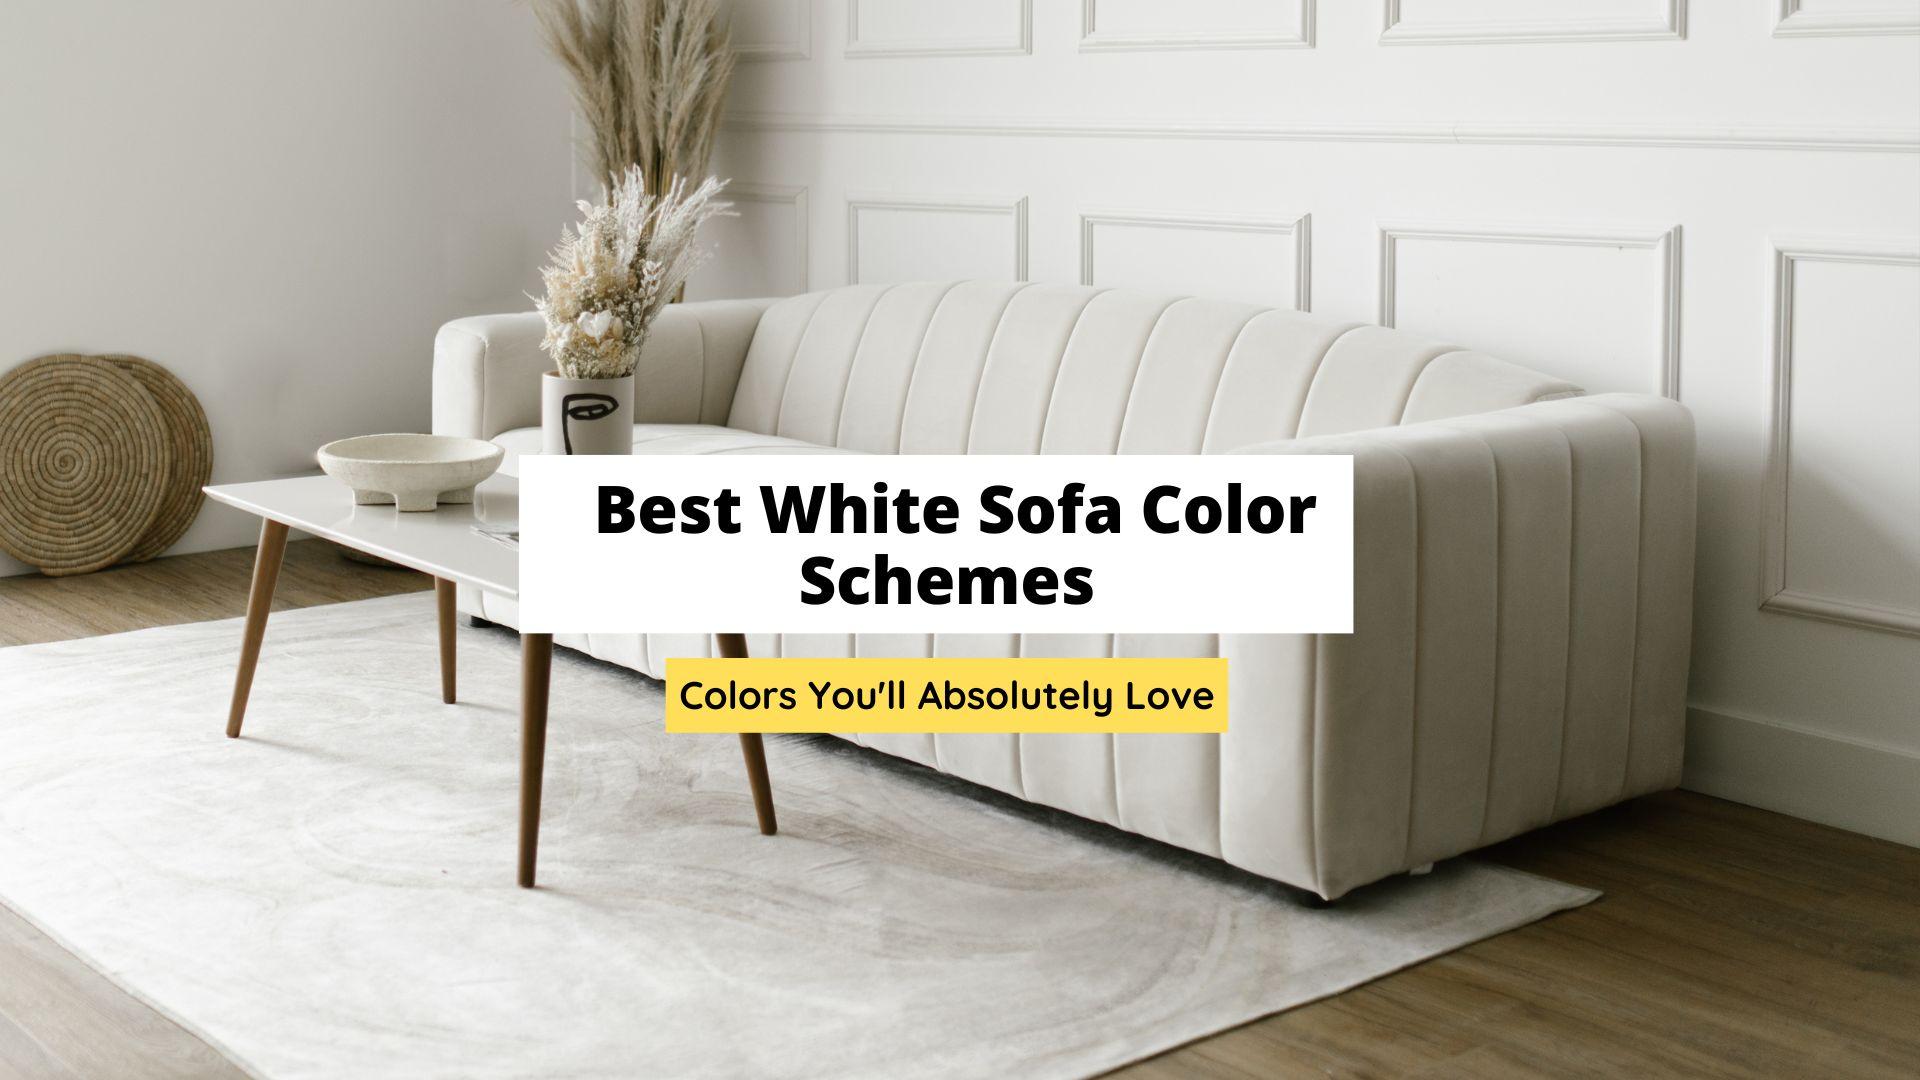 Best White Sofa Color Schemes